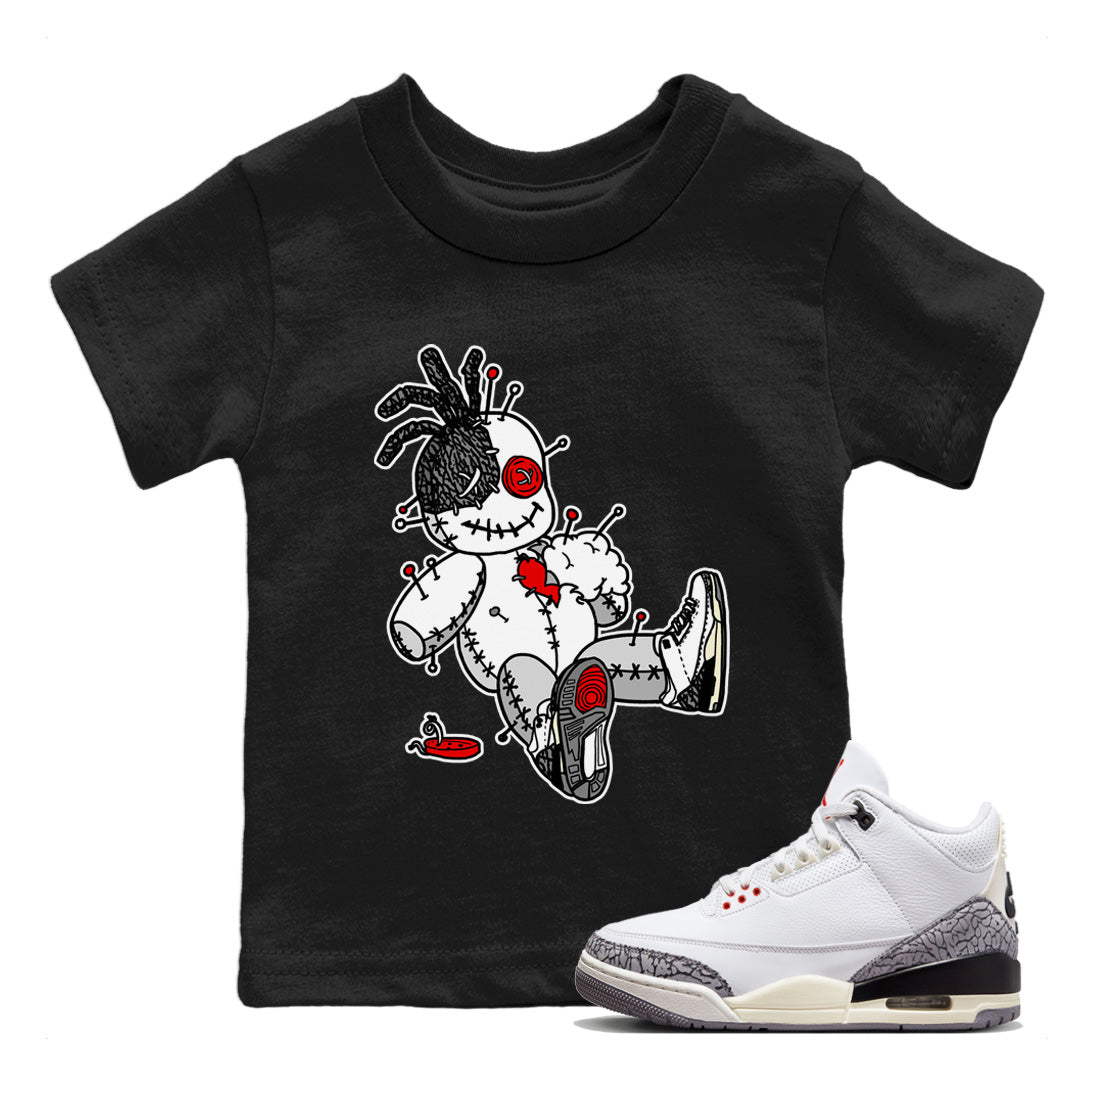 Air Jordan 3 White Cement Shirt To Match Jordans Voodoo Doll Sneaker Tees Air Jordan 3 Retro White Cement Drip Gear Zone Sneaker Matching Clothing Kids Shirts Black 1